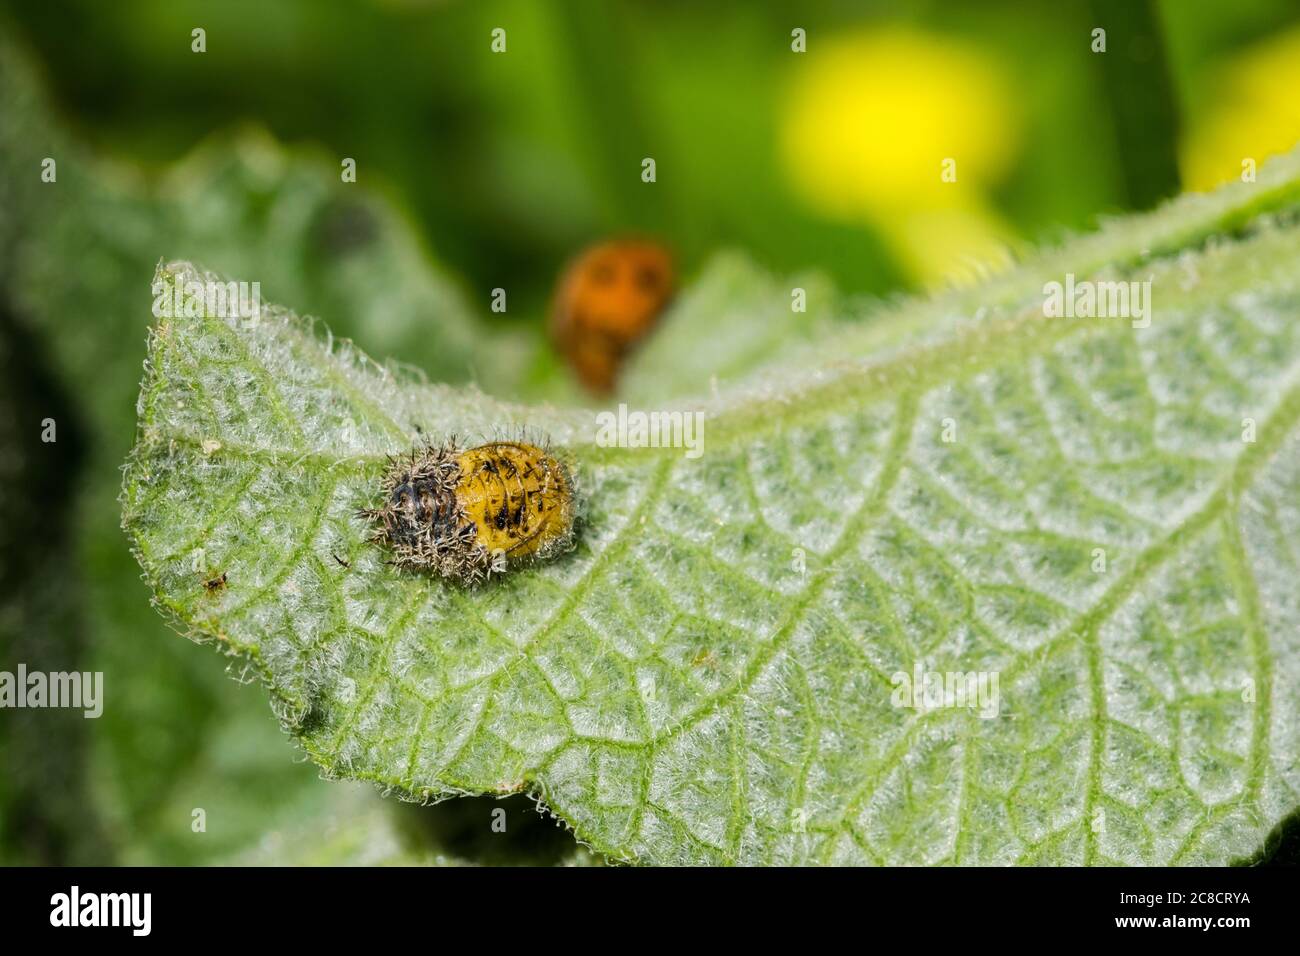 https://c8.alamy.com/comp/2C8CRYA/macro-shot-of-an-abandoned-ladybug-pupa-with-a-blurred-orange-ladybug-beetle-in-the-background-2C8CRYA.jpg